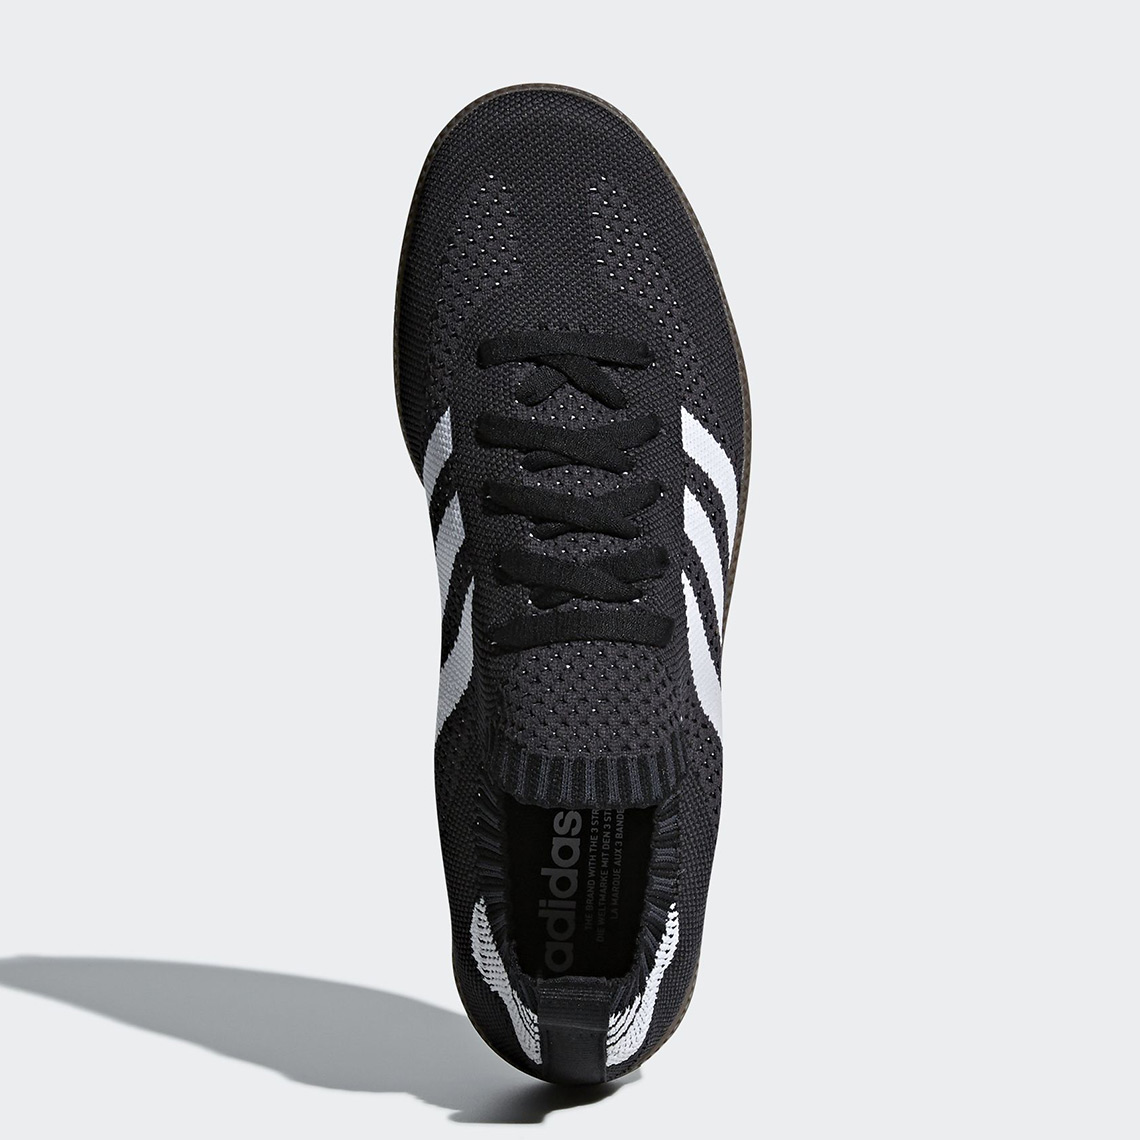 Adidas Samba Primeknit Cq2218 Release Info 3